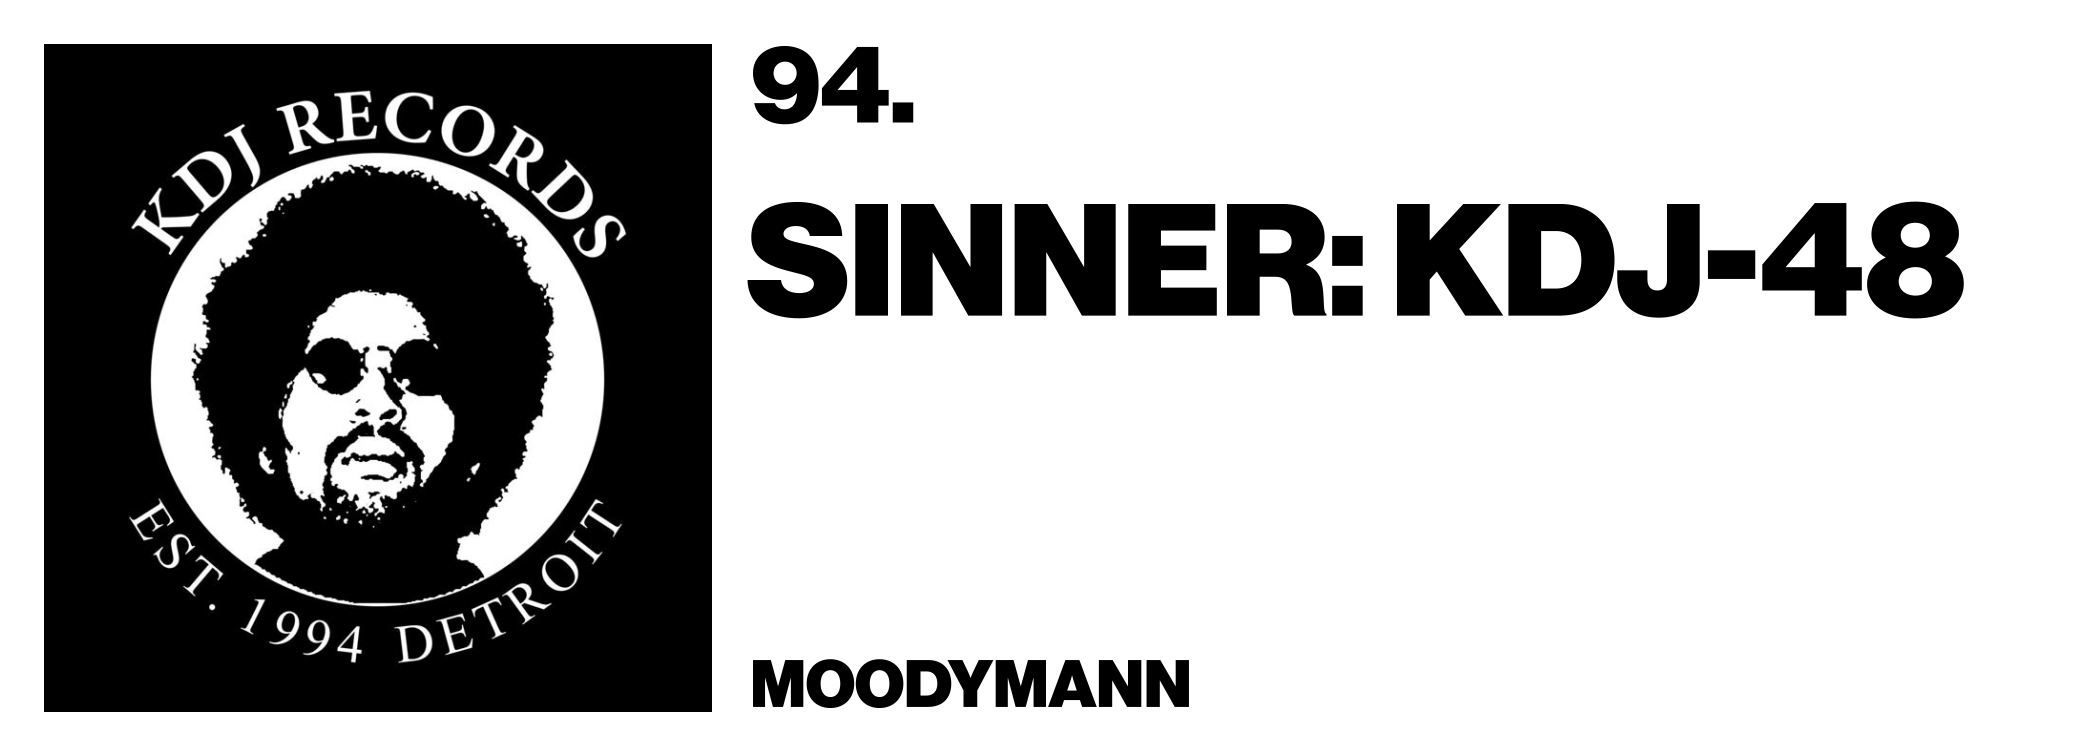 1575919875479-94-Moodymann-Sinner-KDJ-48